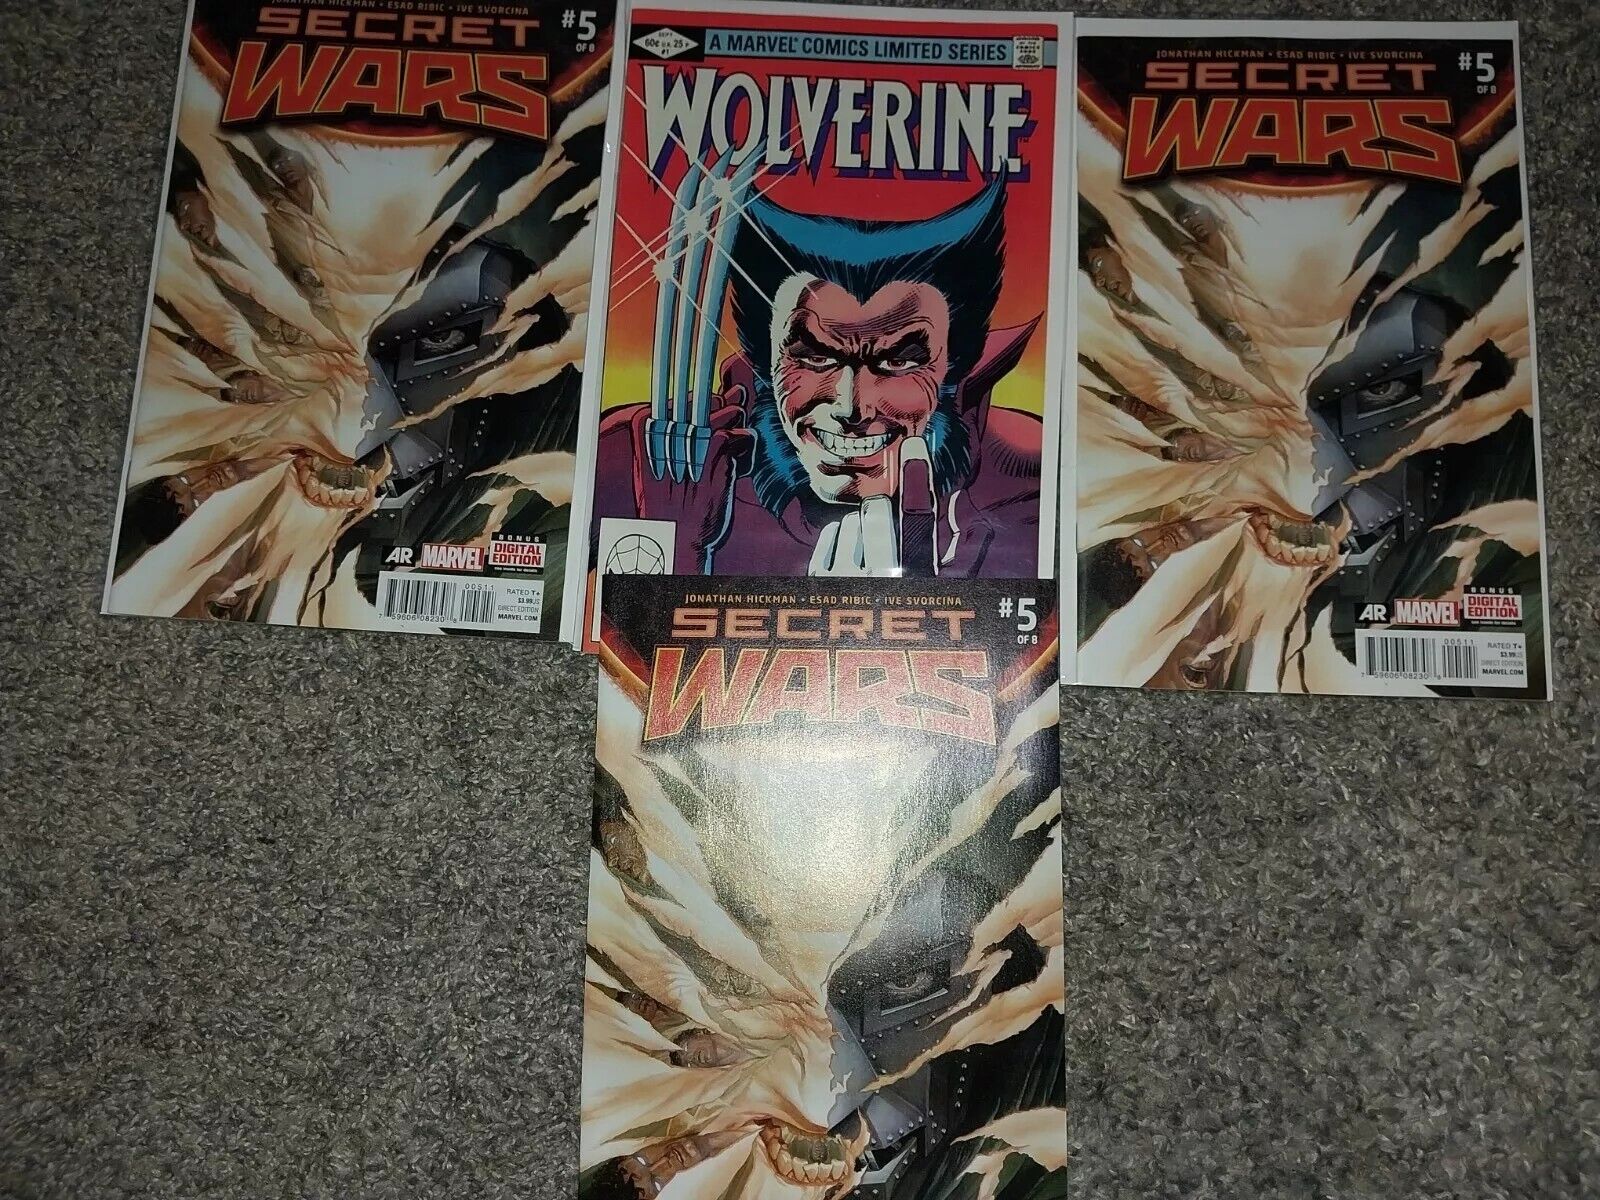 Wolverine #1 (1982) & Secret Wars #5 (2015) - Lot Of 4